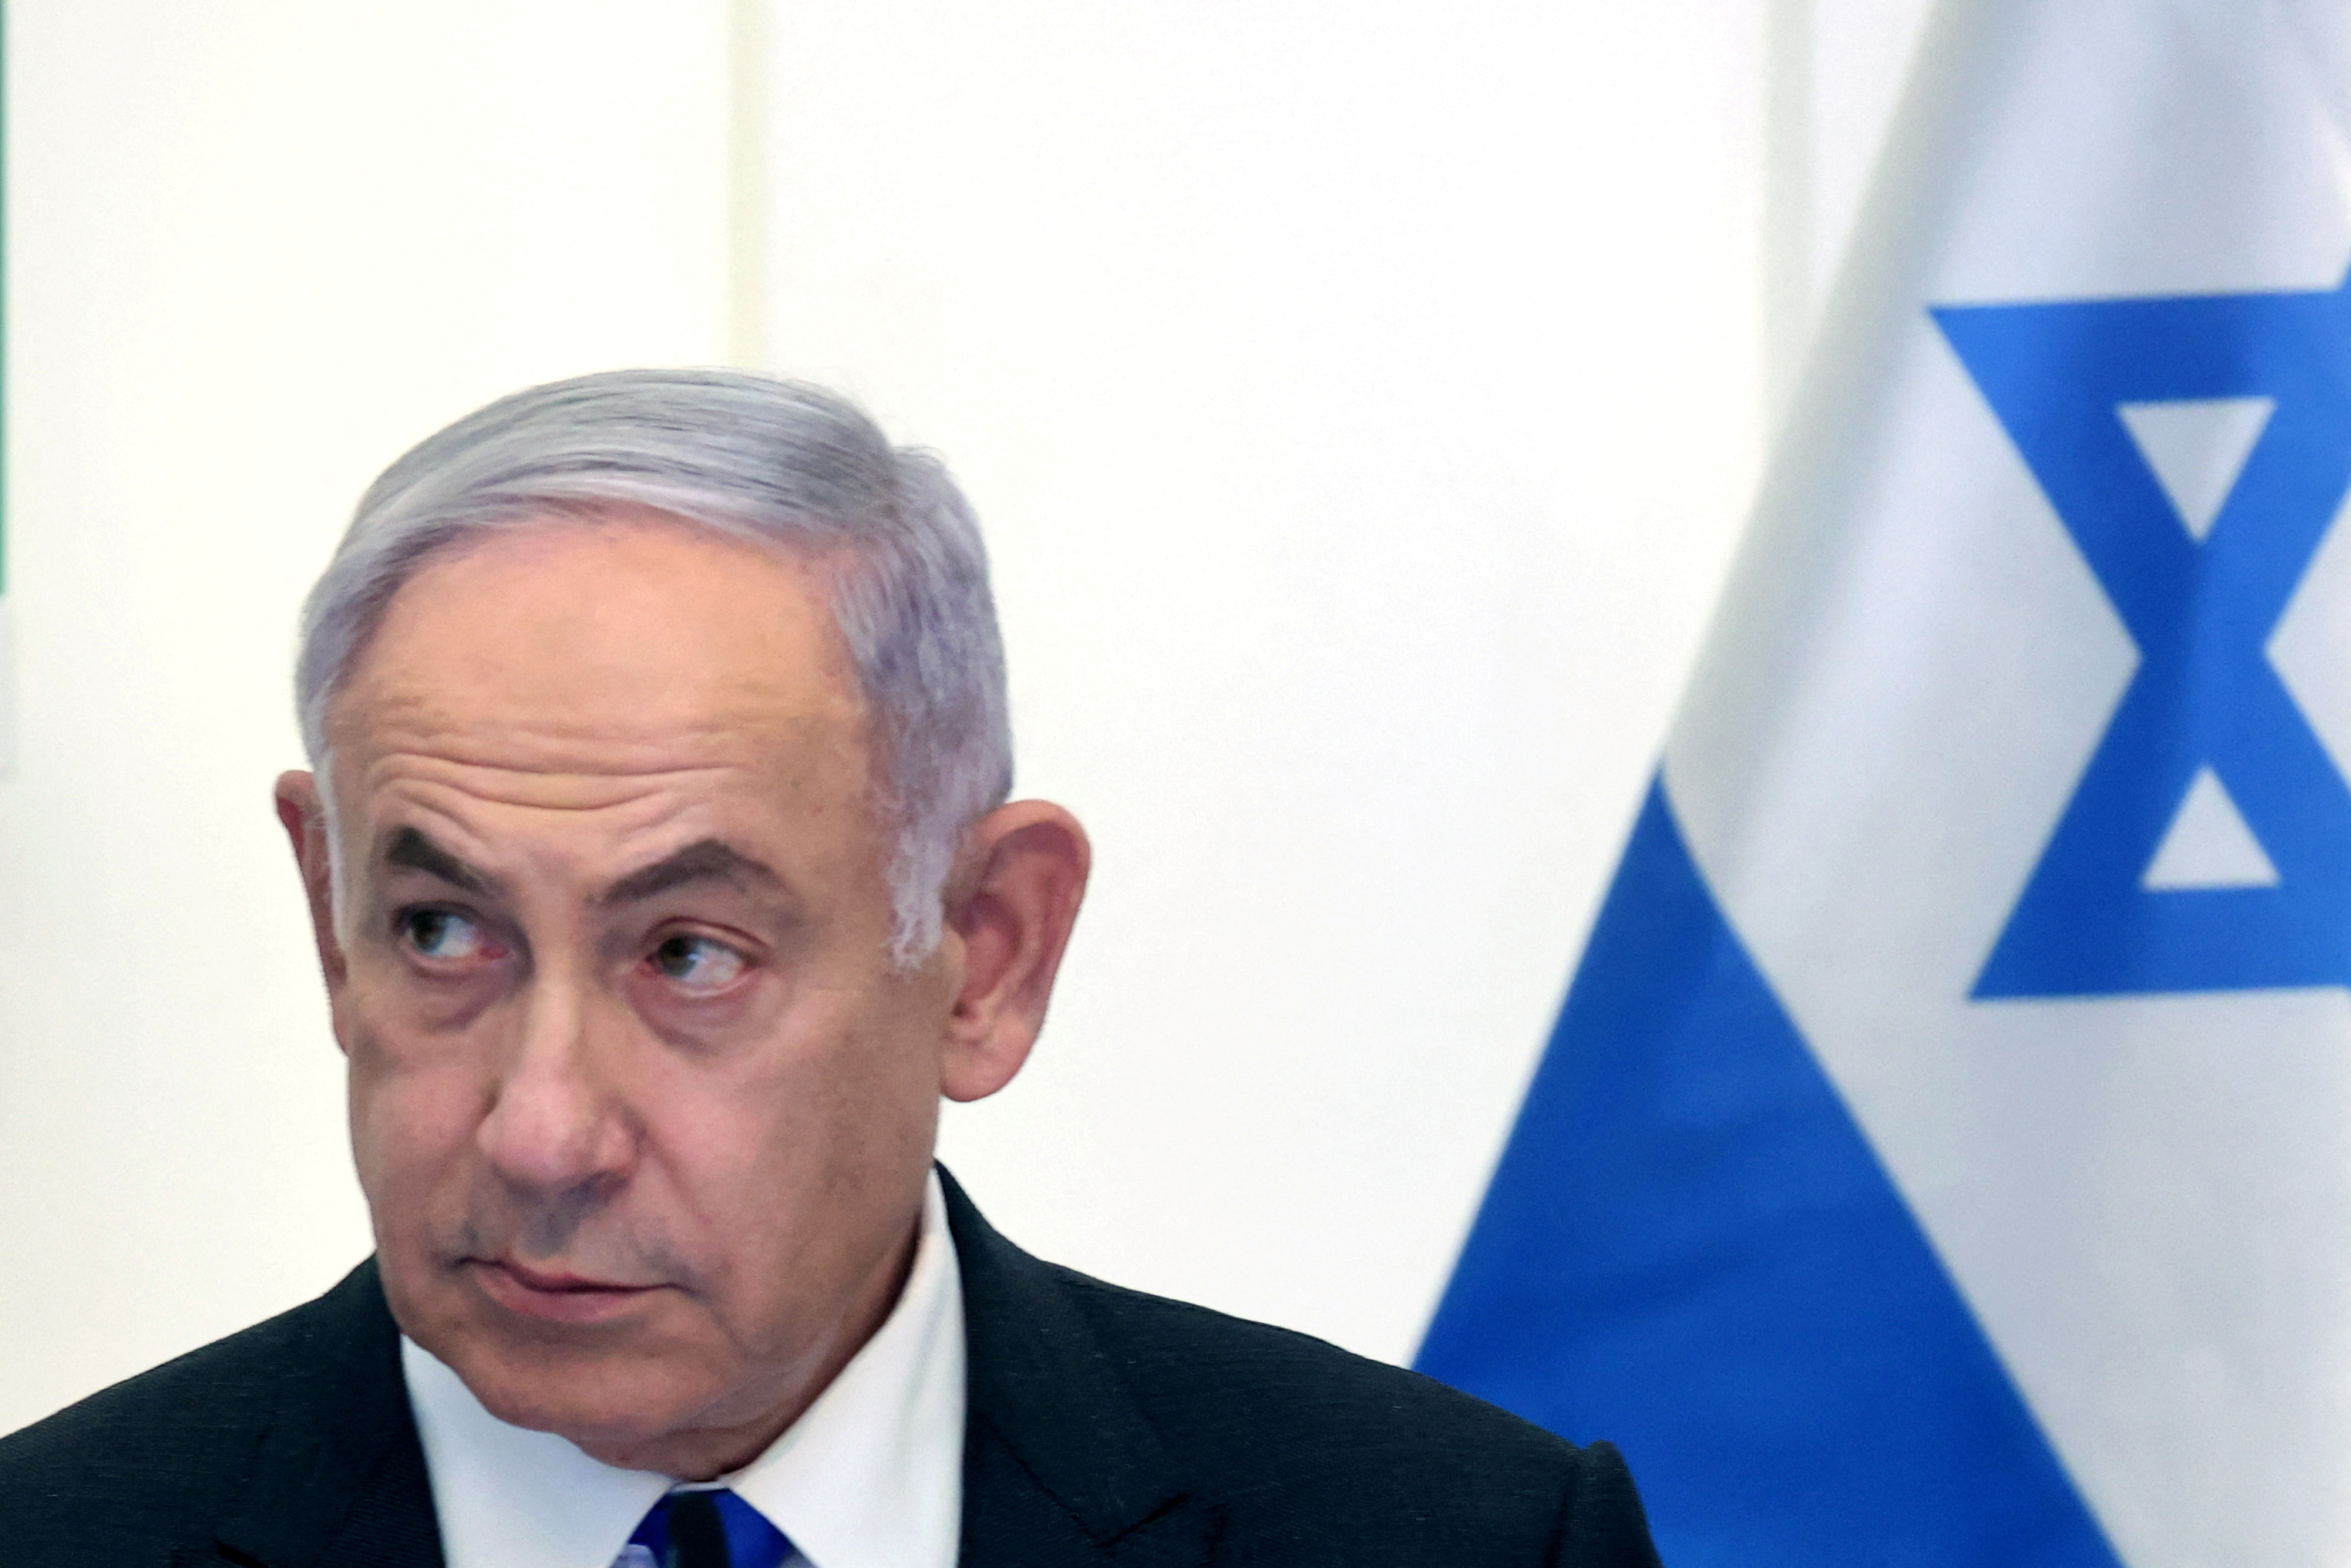 Israeli Prime Minister Benjamin Netanyahu attends a cabinet meeting at the Bible Lands Museum in Jerusalem